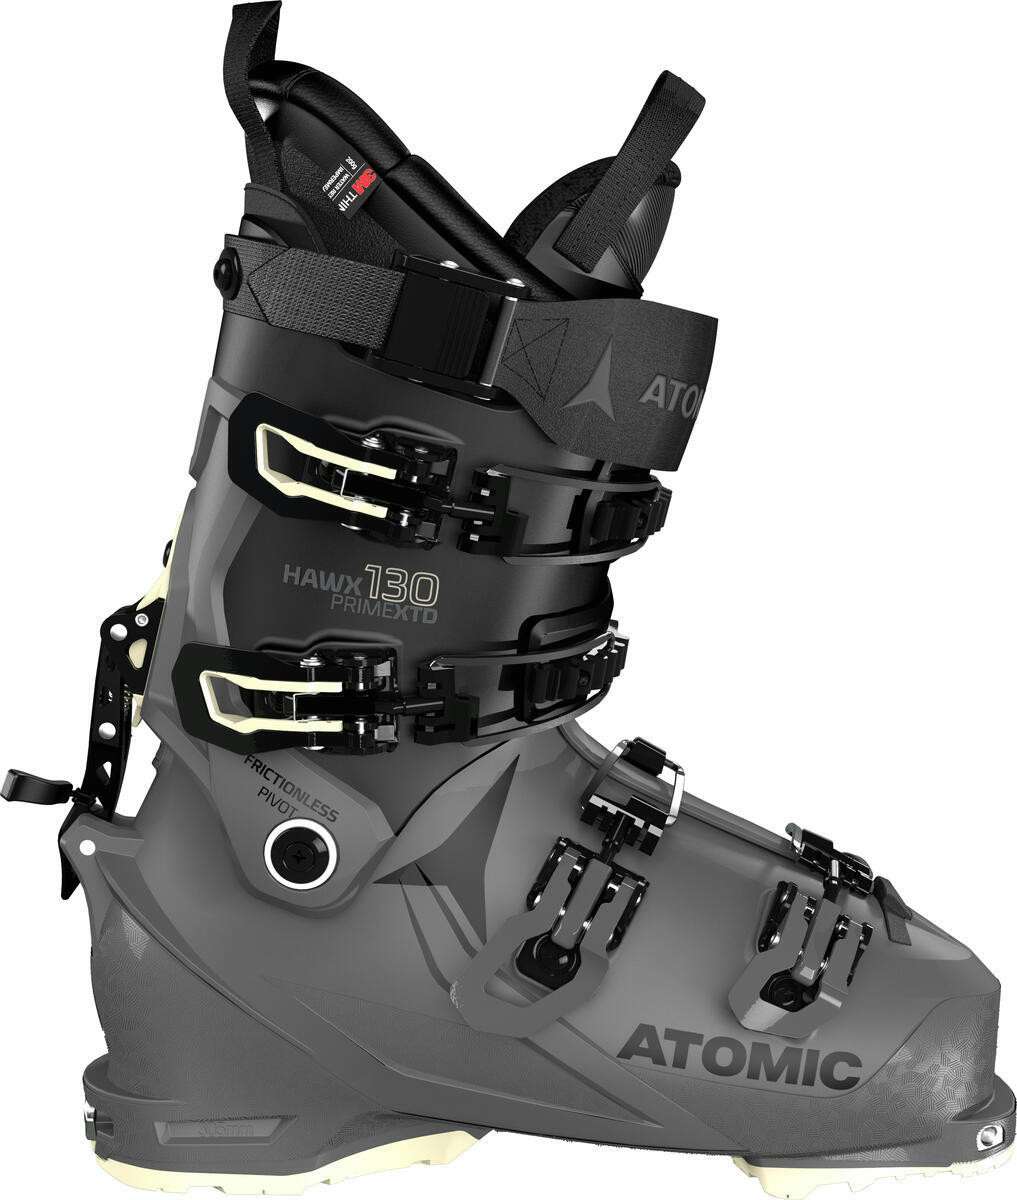 Hawx Prime XTD 130 CT Ski Boots Anthracite